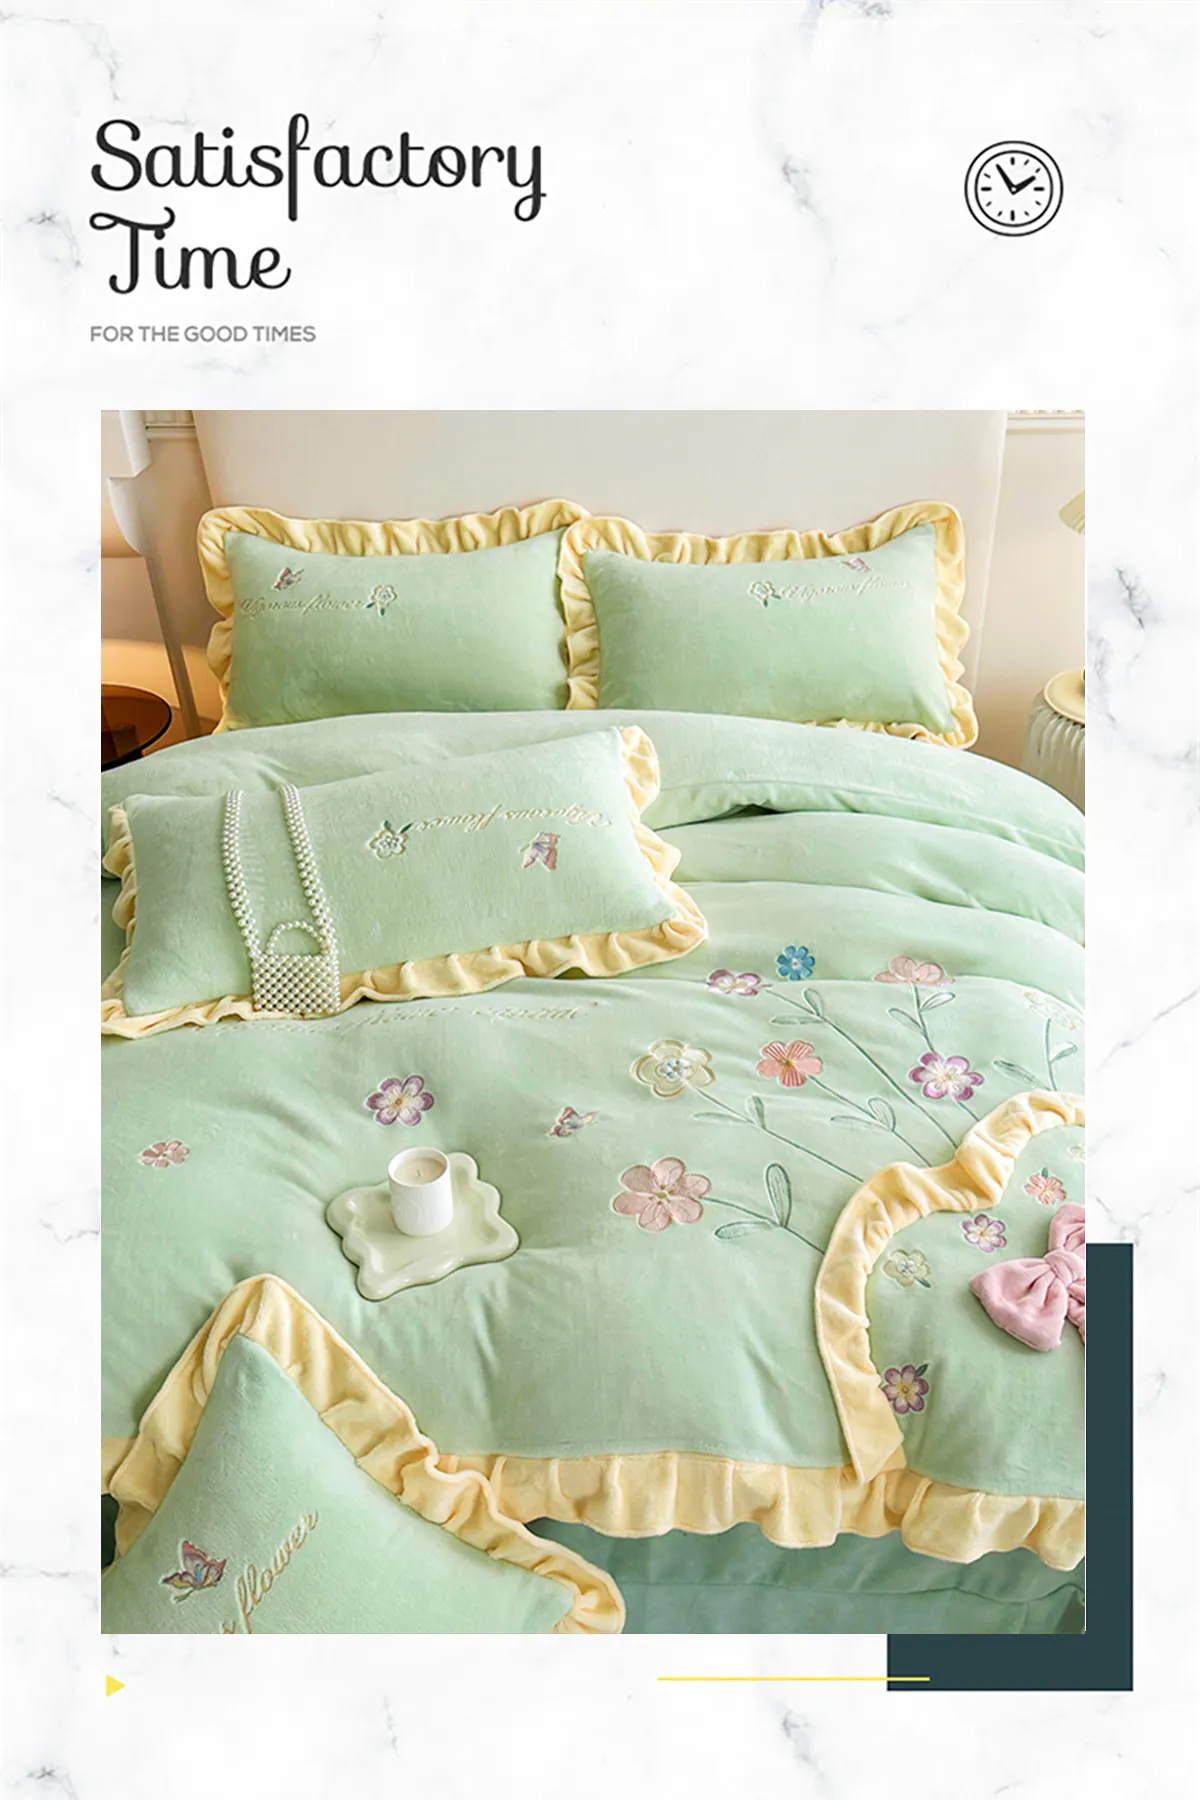 Romantic-Milk-Fiber-Comforter-Cover-Bed-Sheet-Pillowcases-4-Pcs-Set11